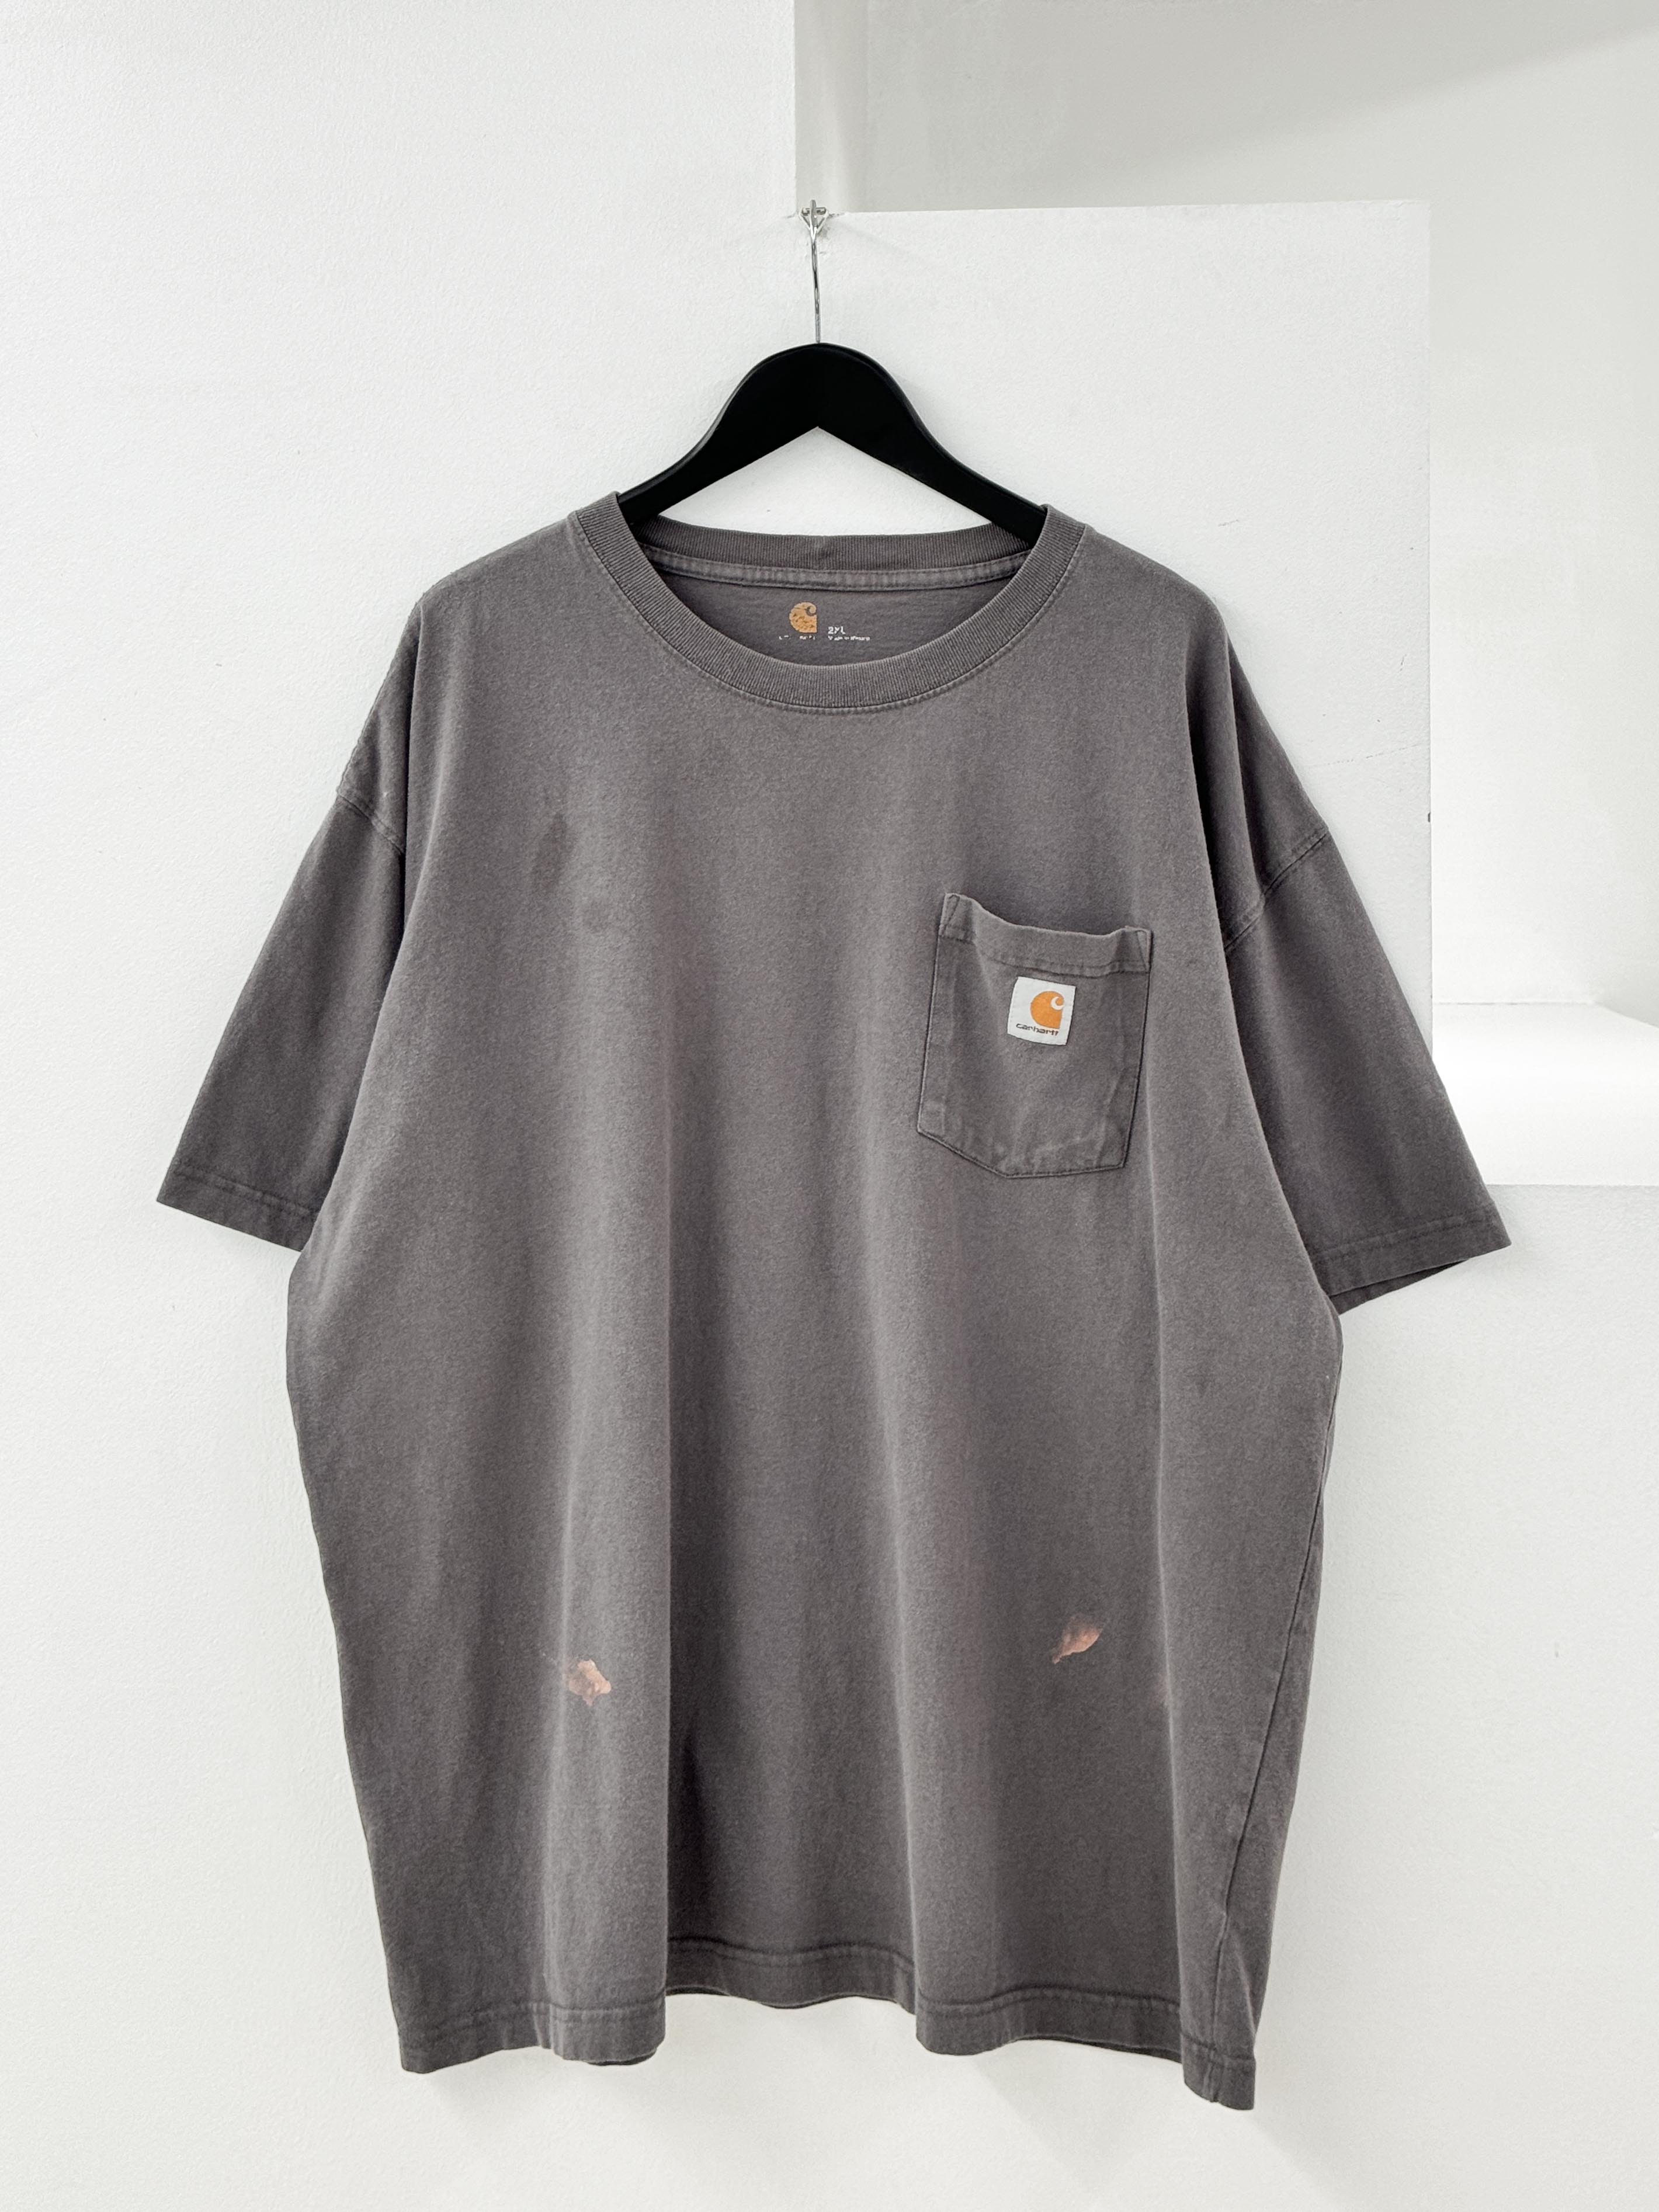 Carhartt pocket T-shirts 2XL size